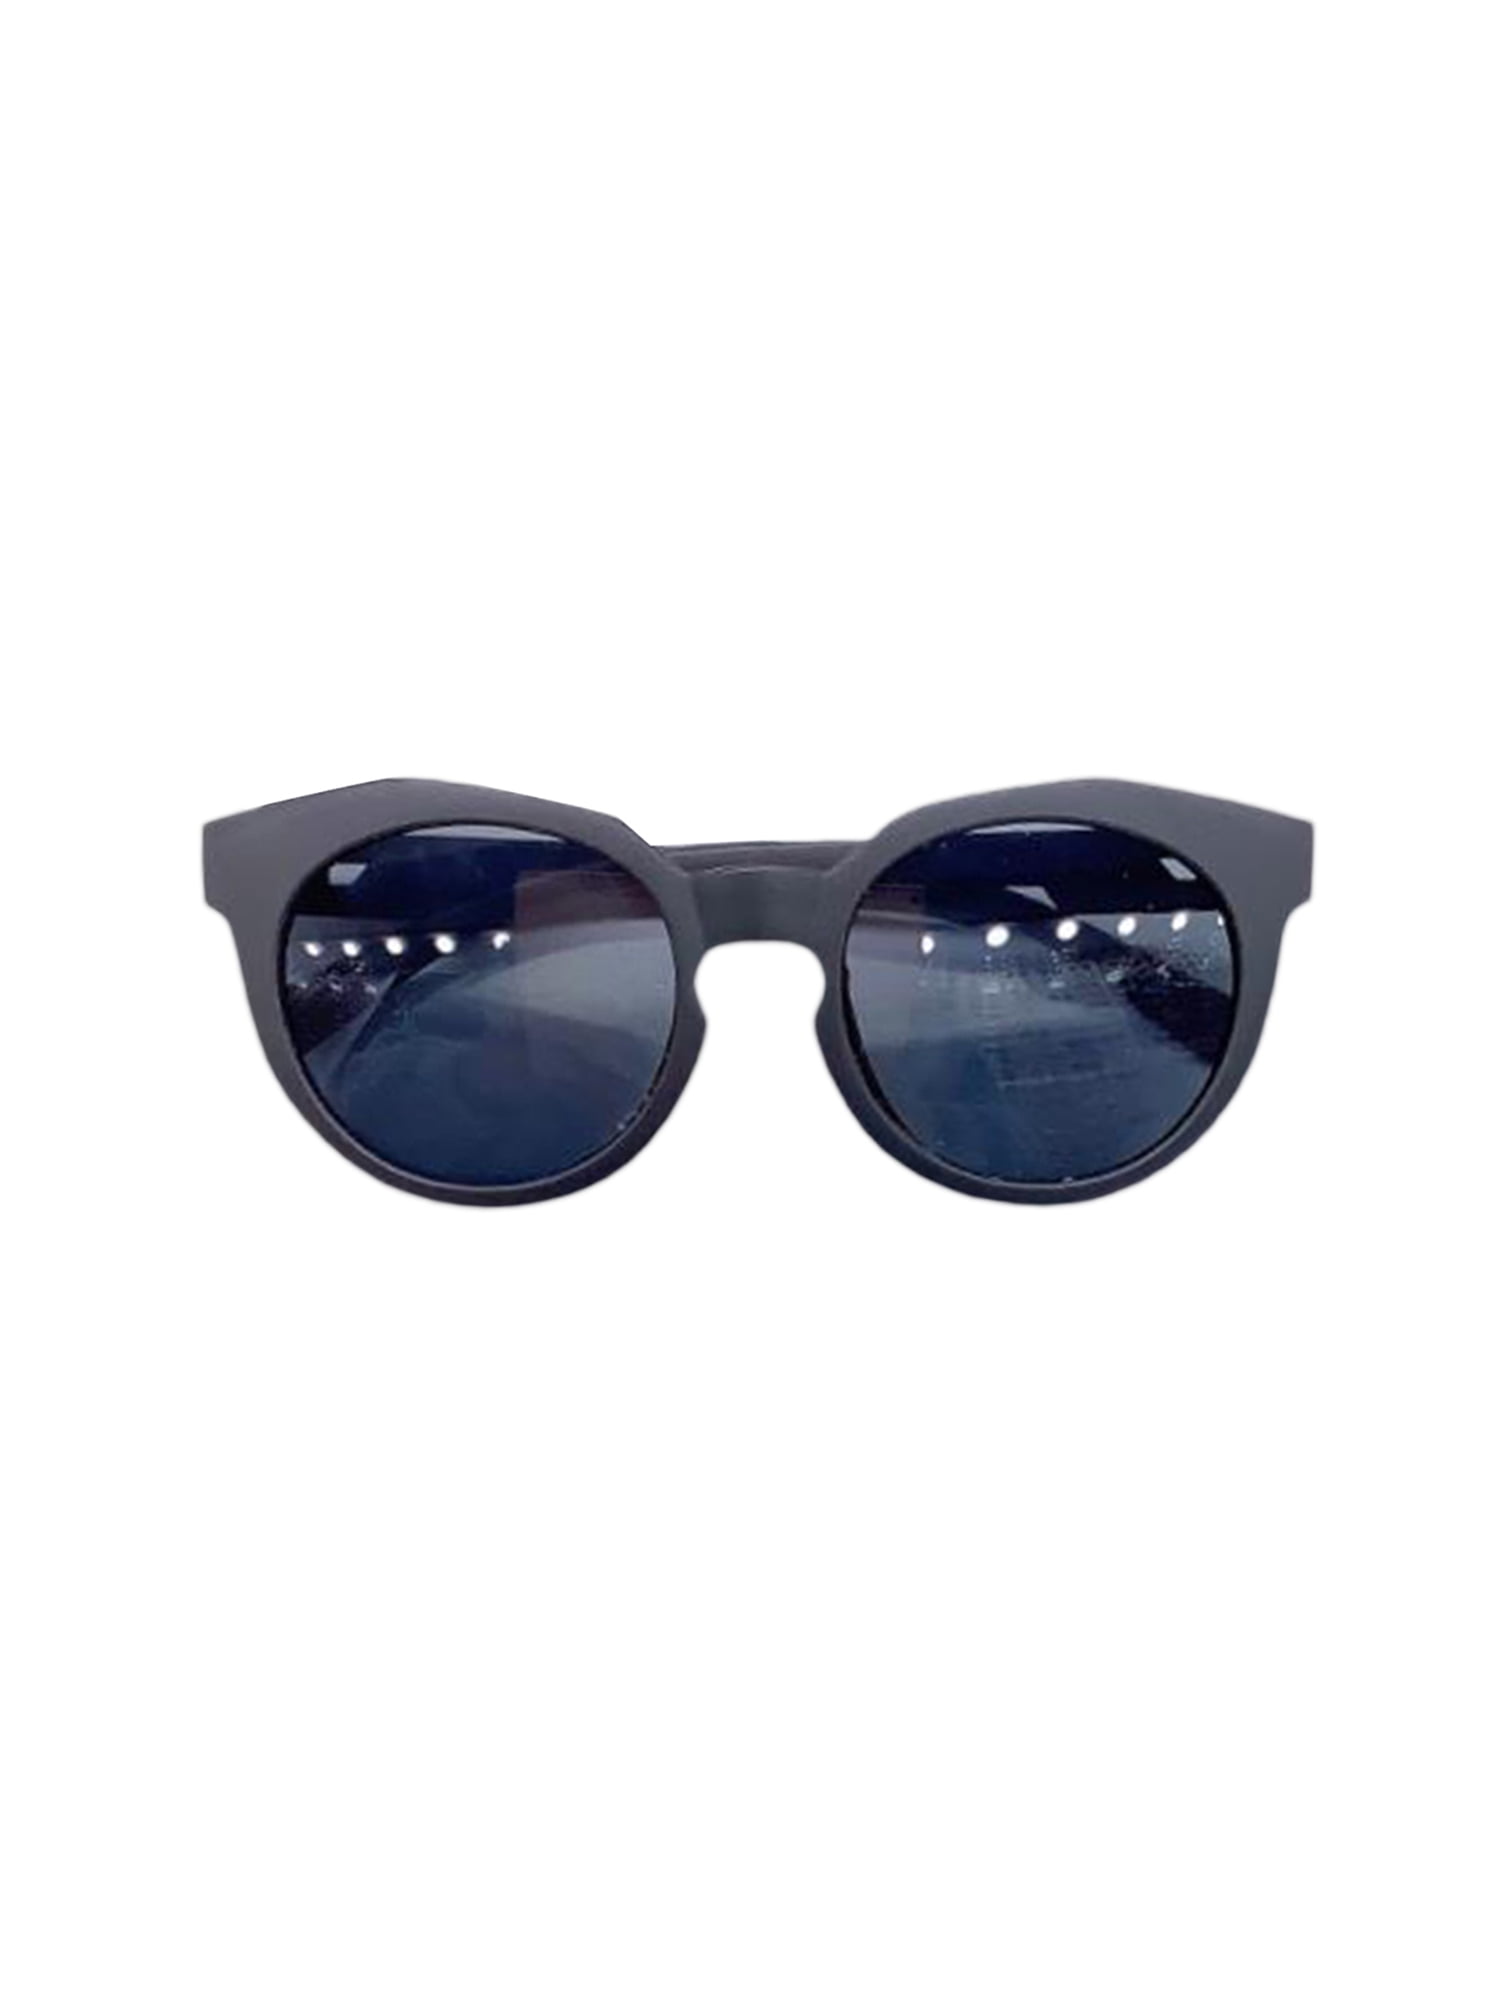 Details about   Sunglasses glasses sport oval mirror cts37922 show original title 